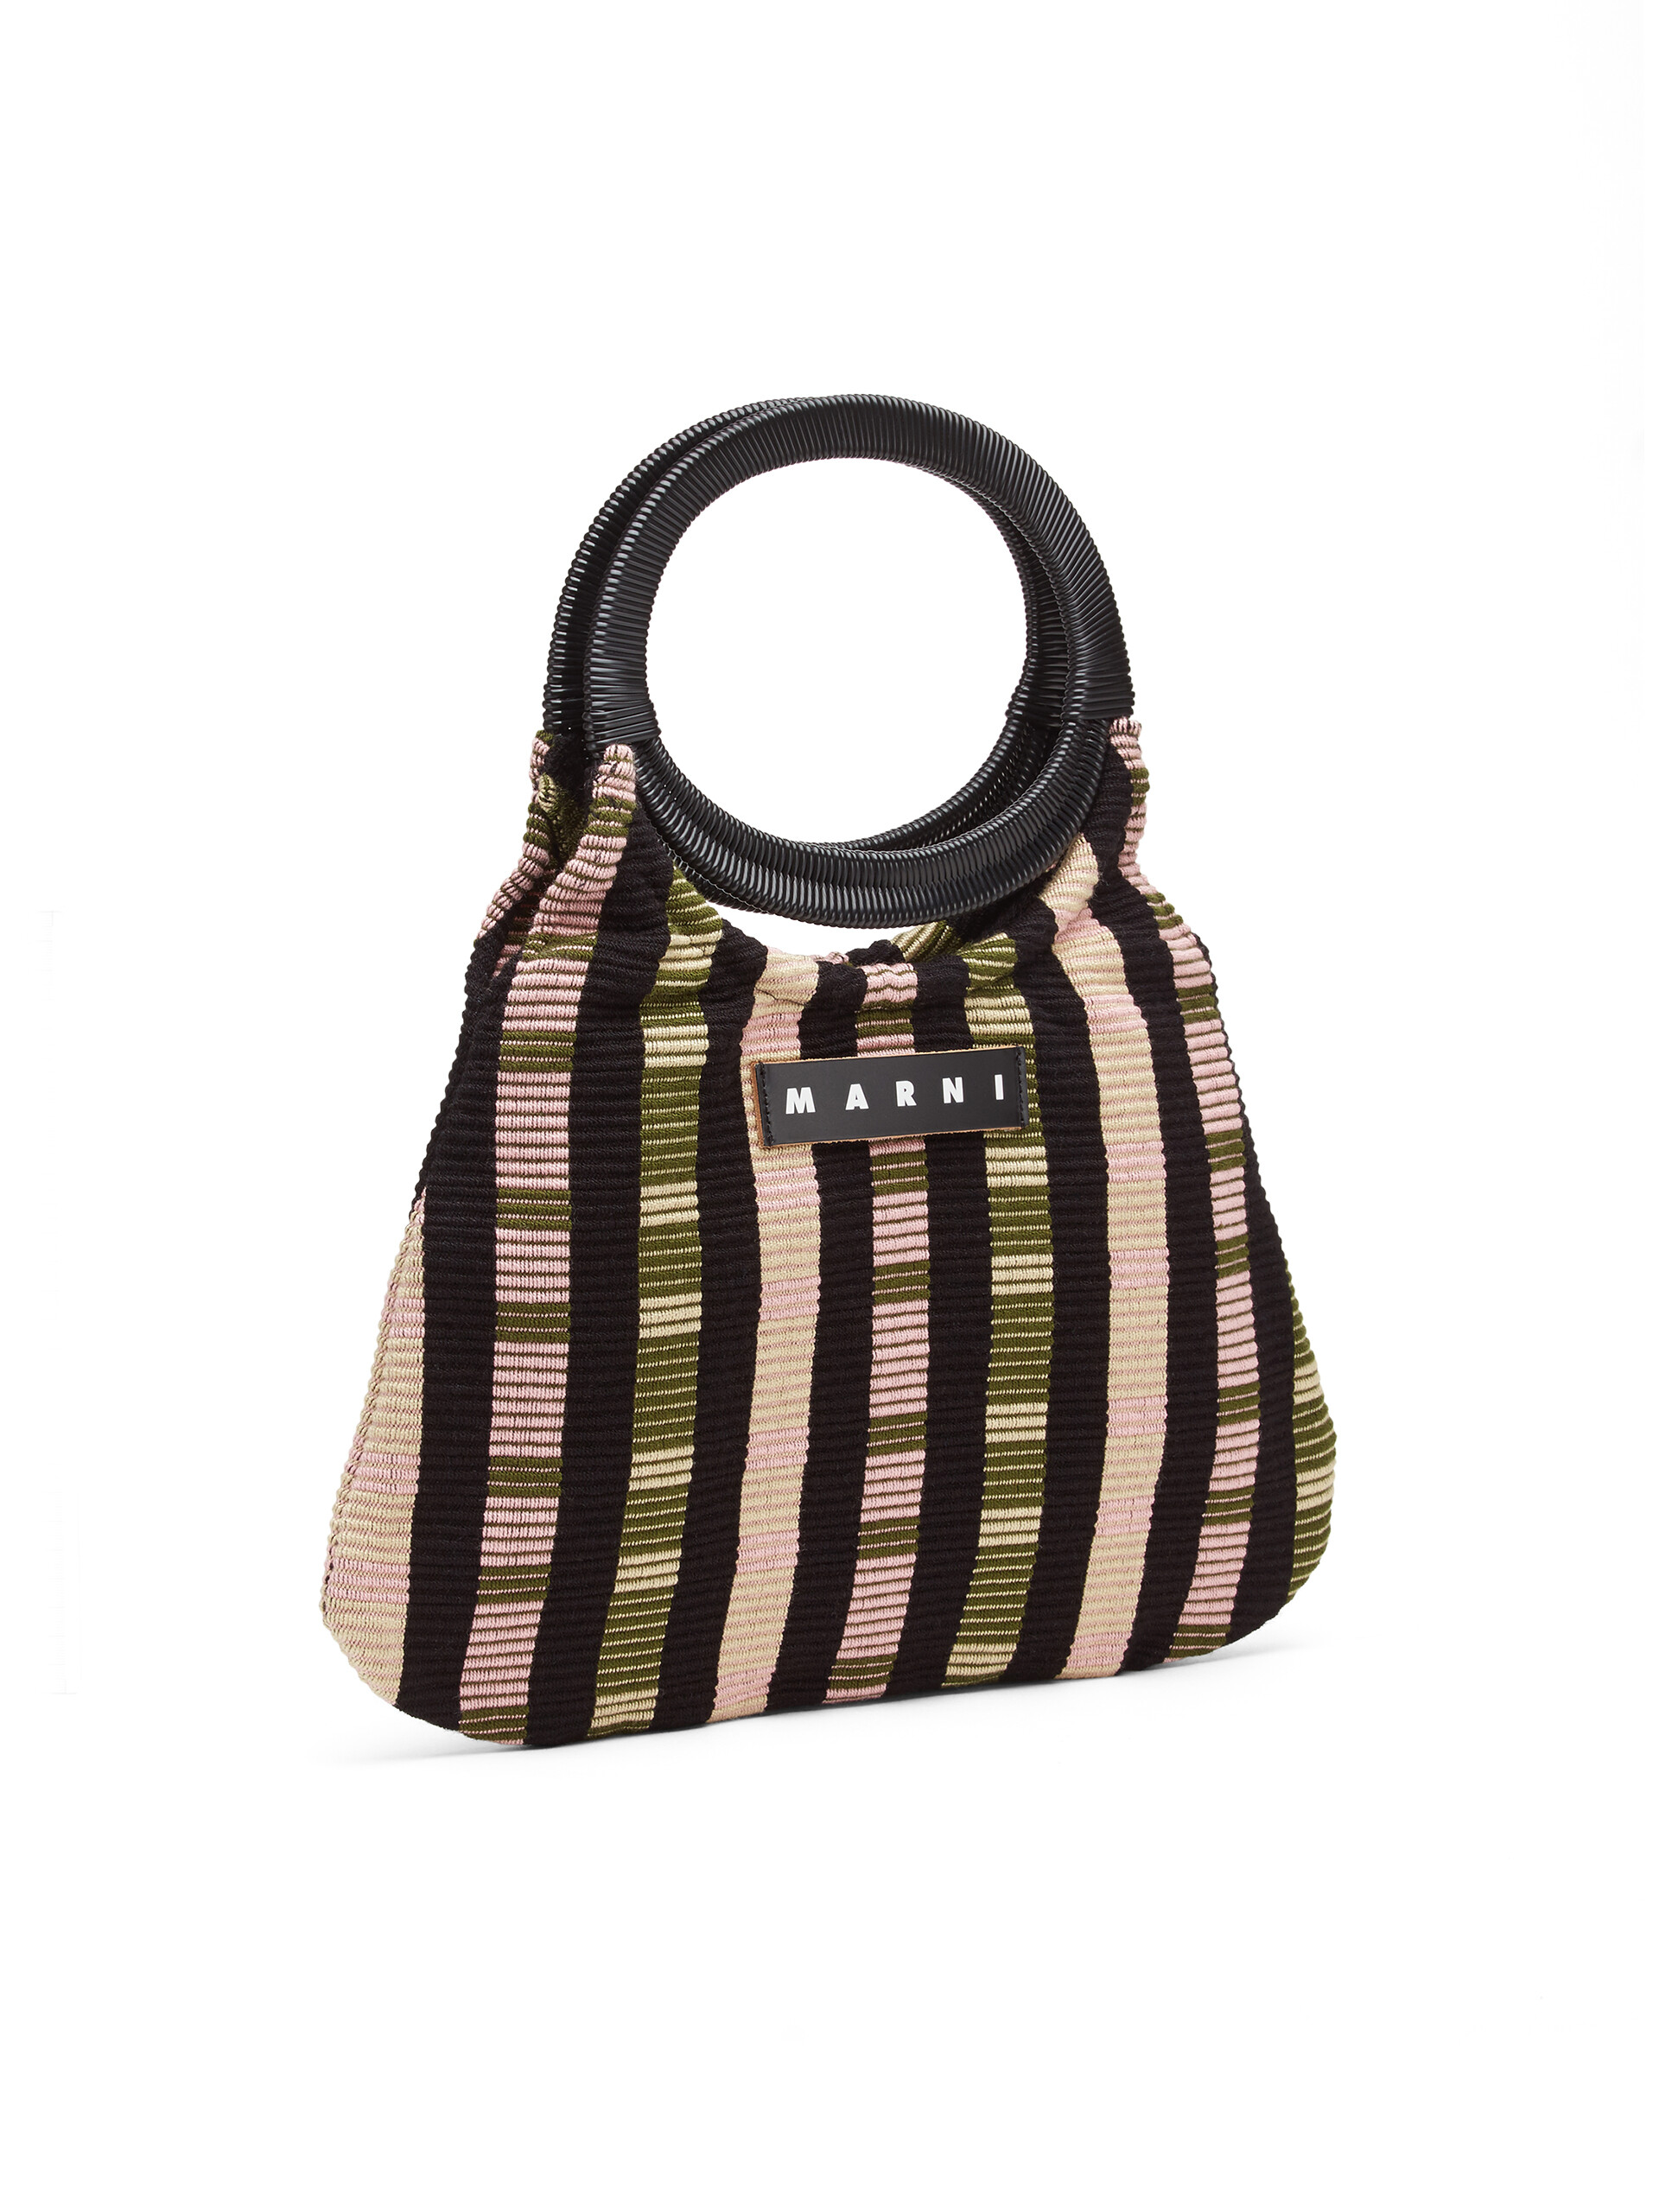 MARNI MARKET BOAT Tasche im Colourblock-Design - Taschen - Image 2